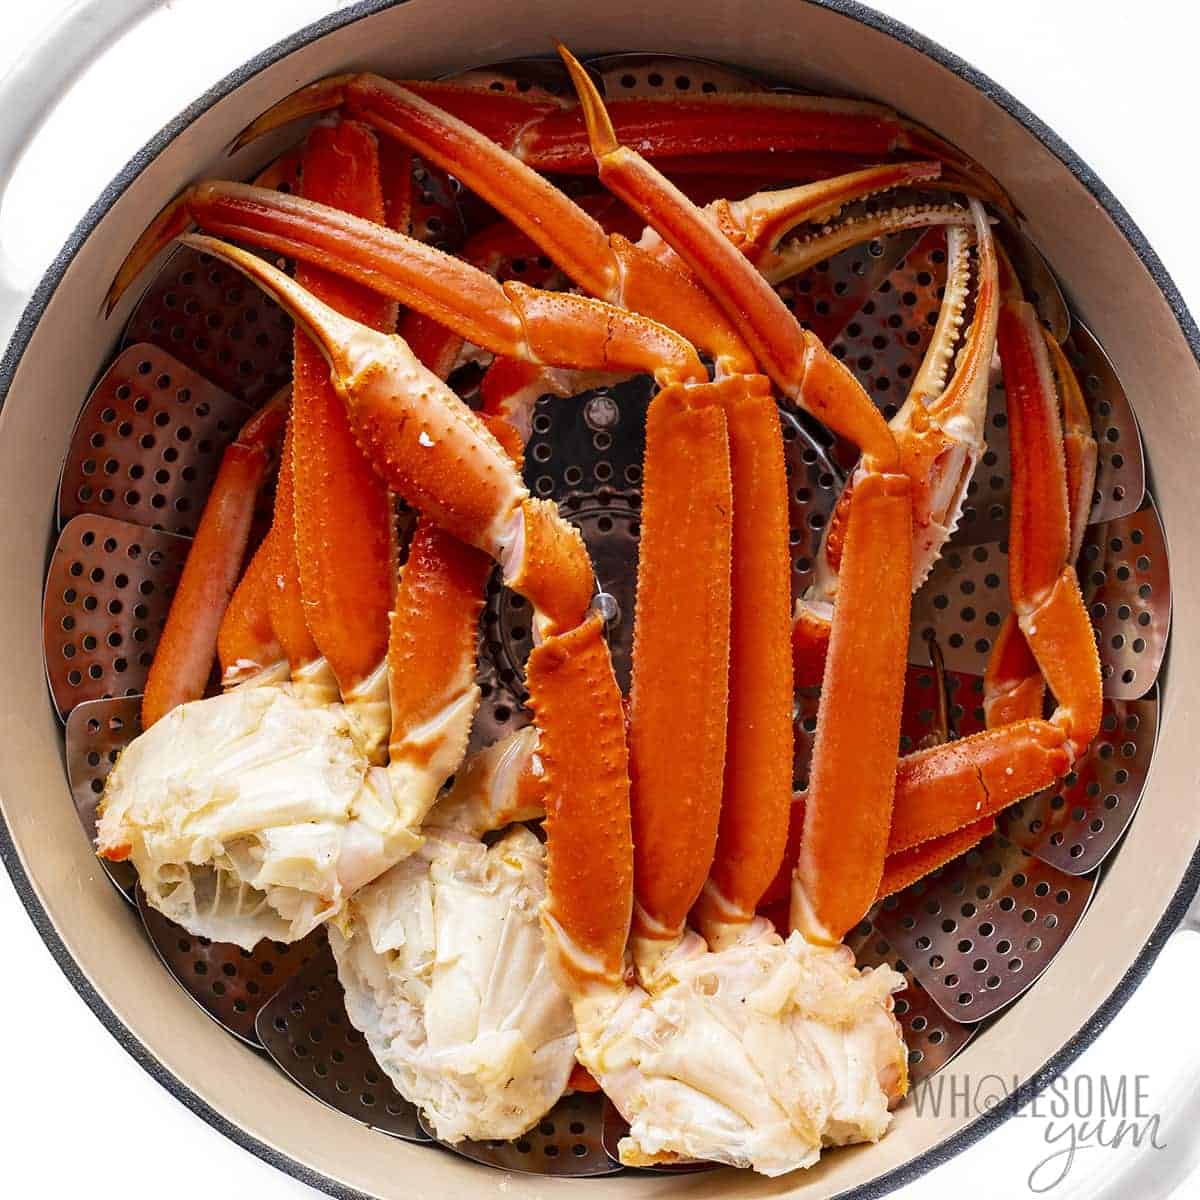 Crab legs in steamer basket.